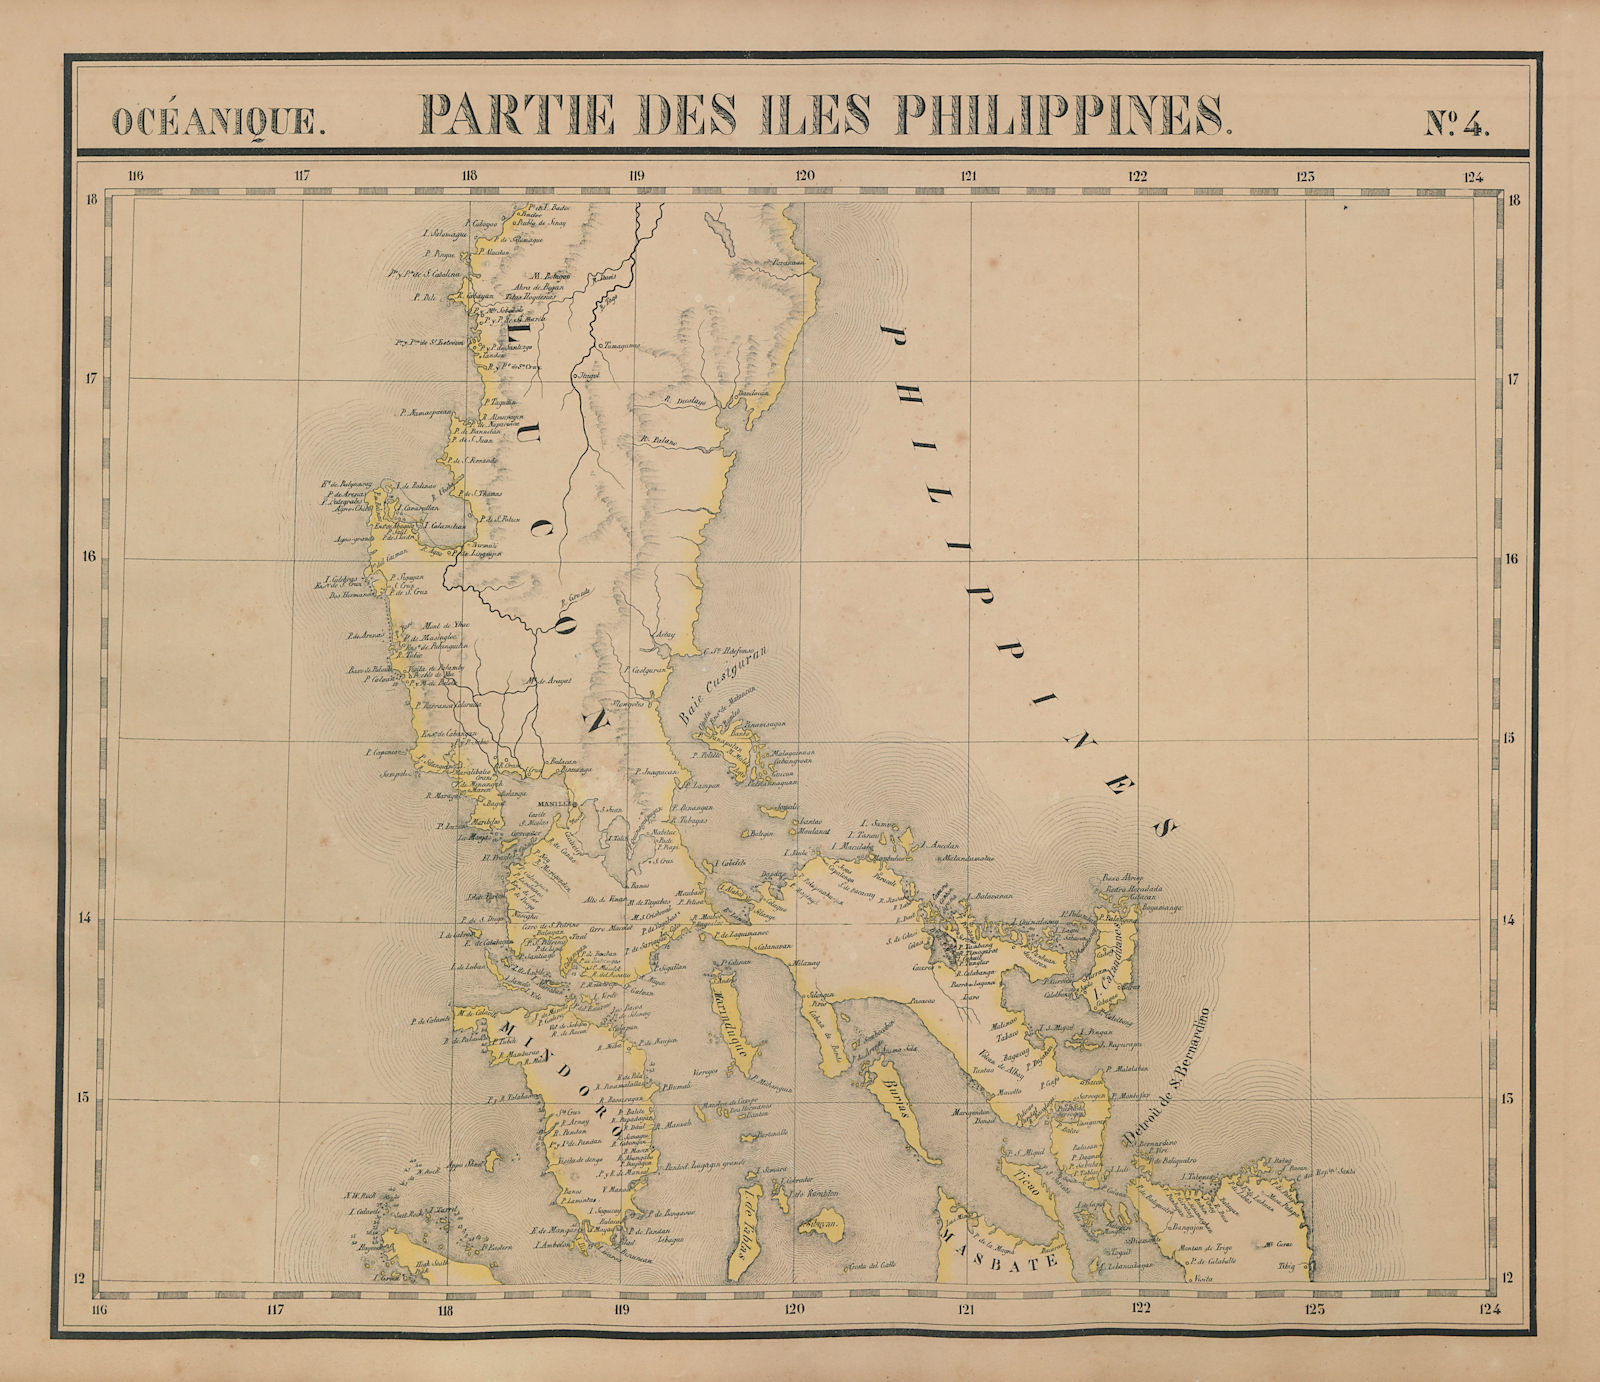 Océanique. Partie des Iles Philippines #4. Luzon Mindoro. VANDERMAELEN 1827 map